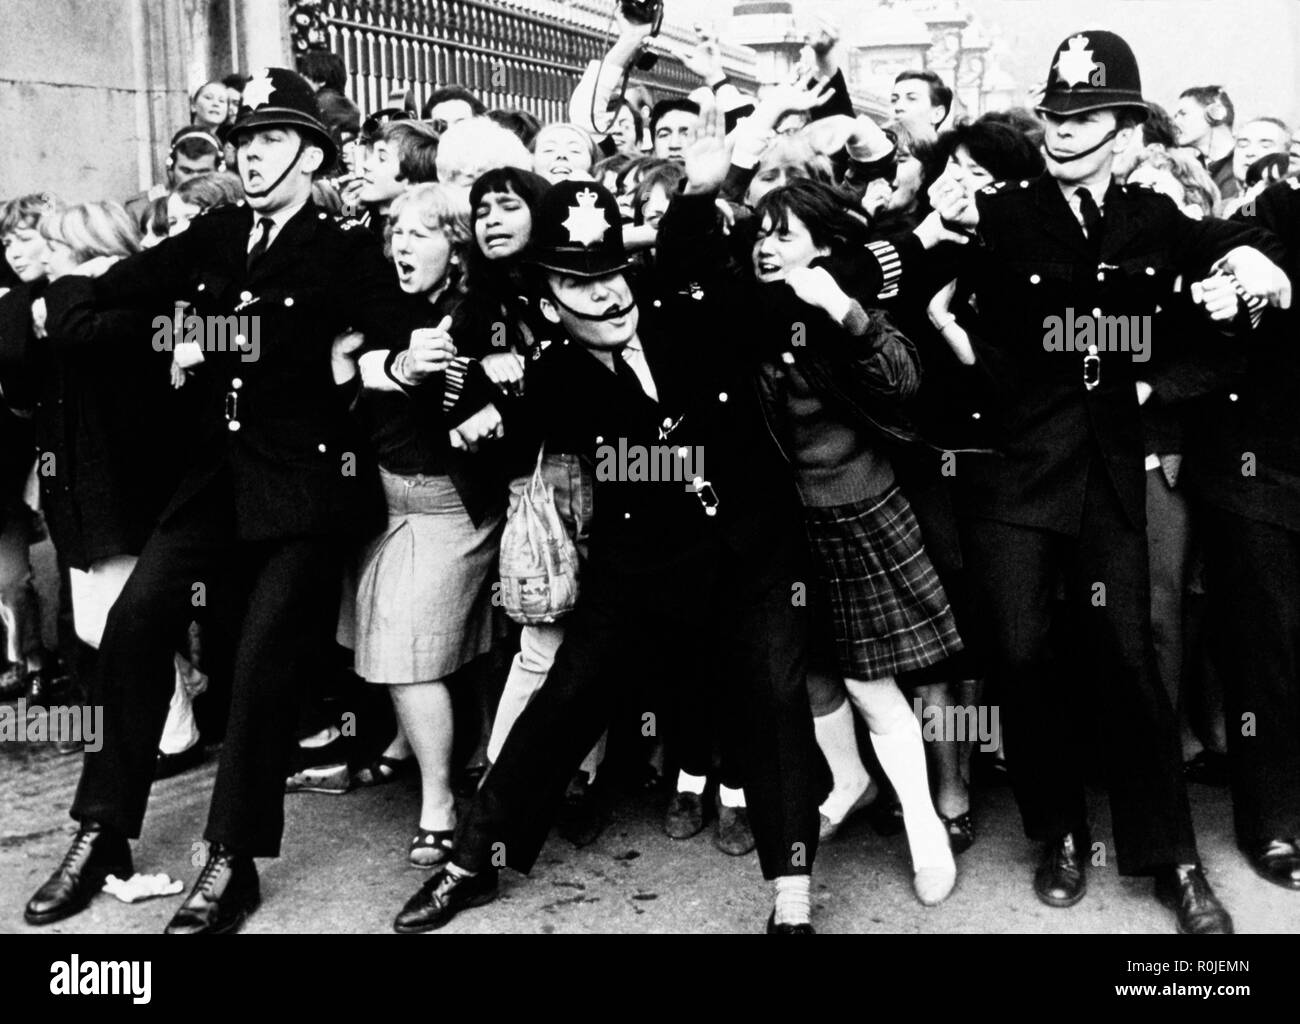 Beatles Fans. Stock Photo